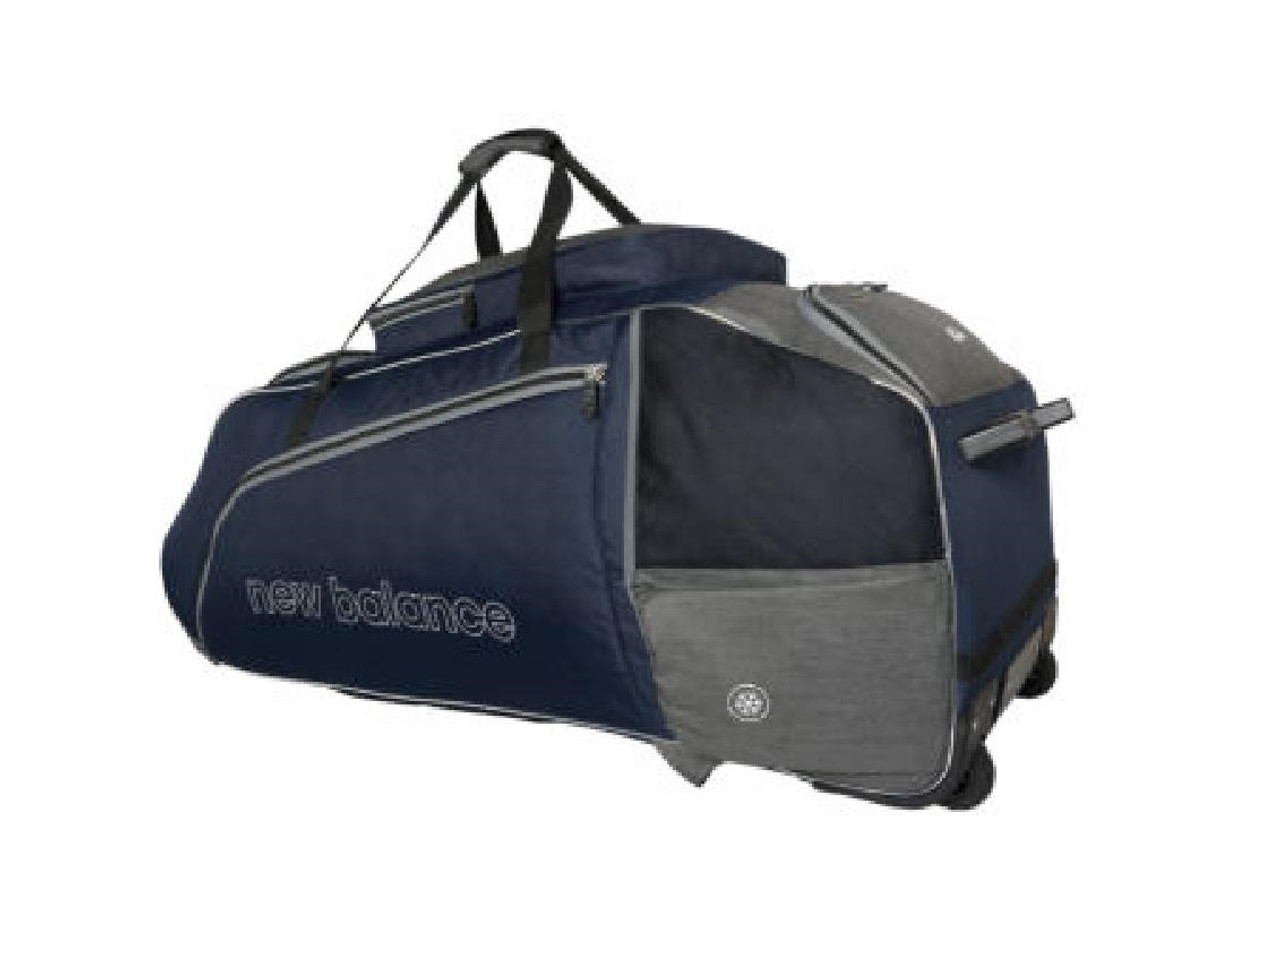 New Balance Heritage Combo Adult Cricket Kit Bag